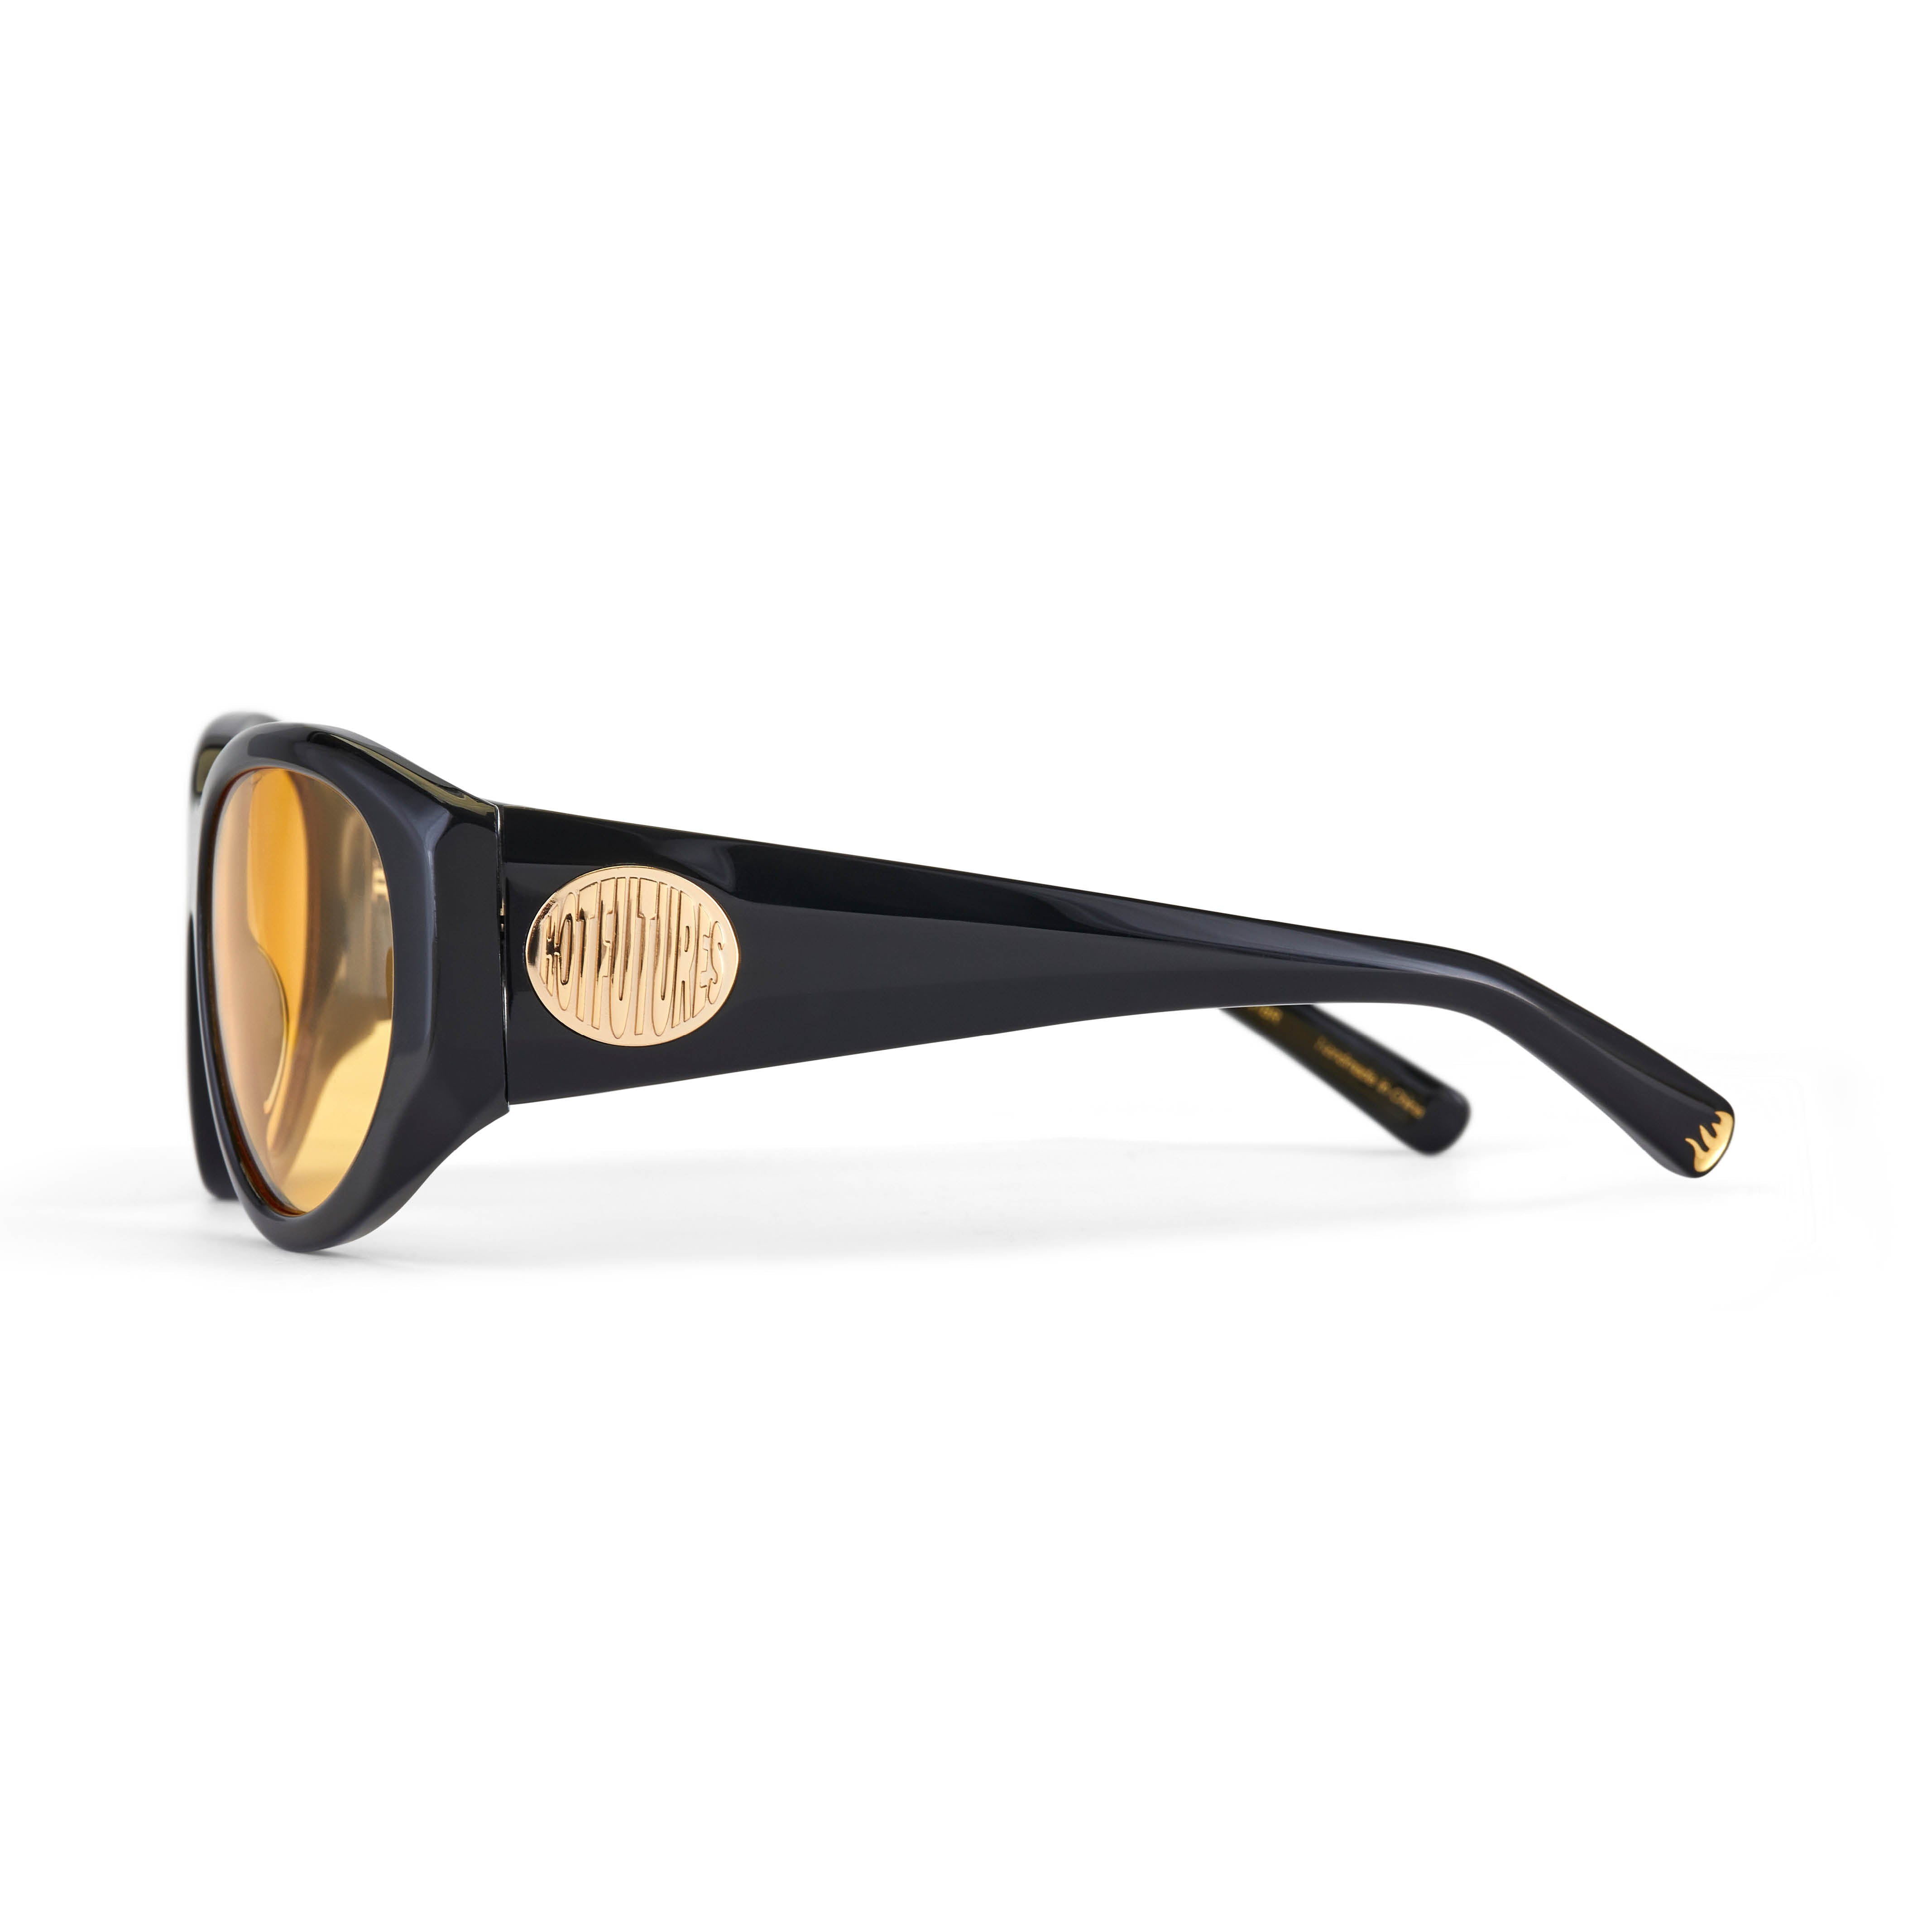 Wrap Around Sunglasses Black Acetate Frame Yellow Lens - Hot Futures